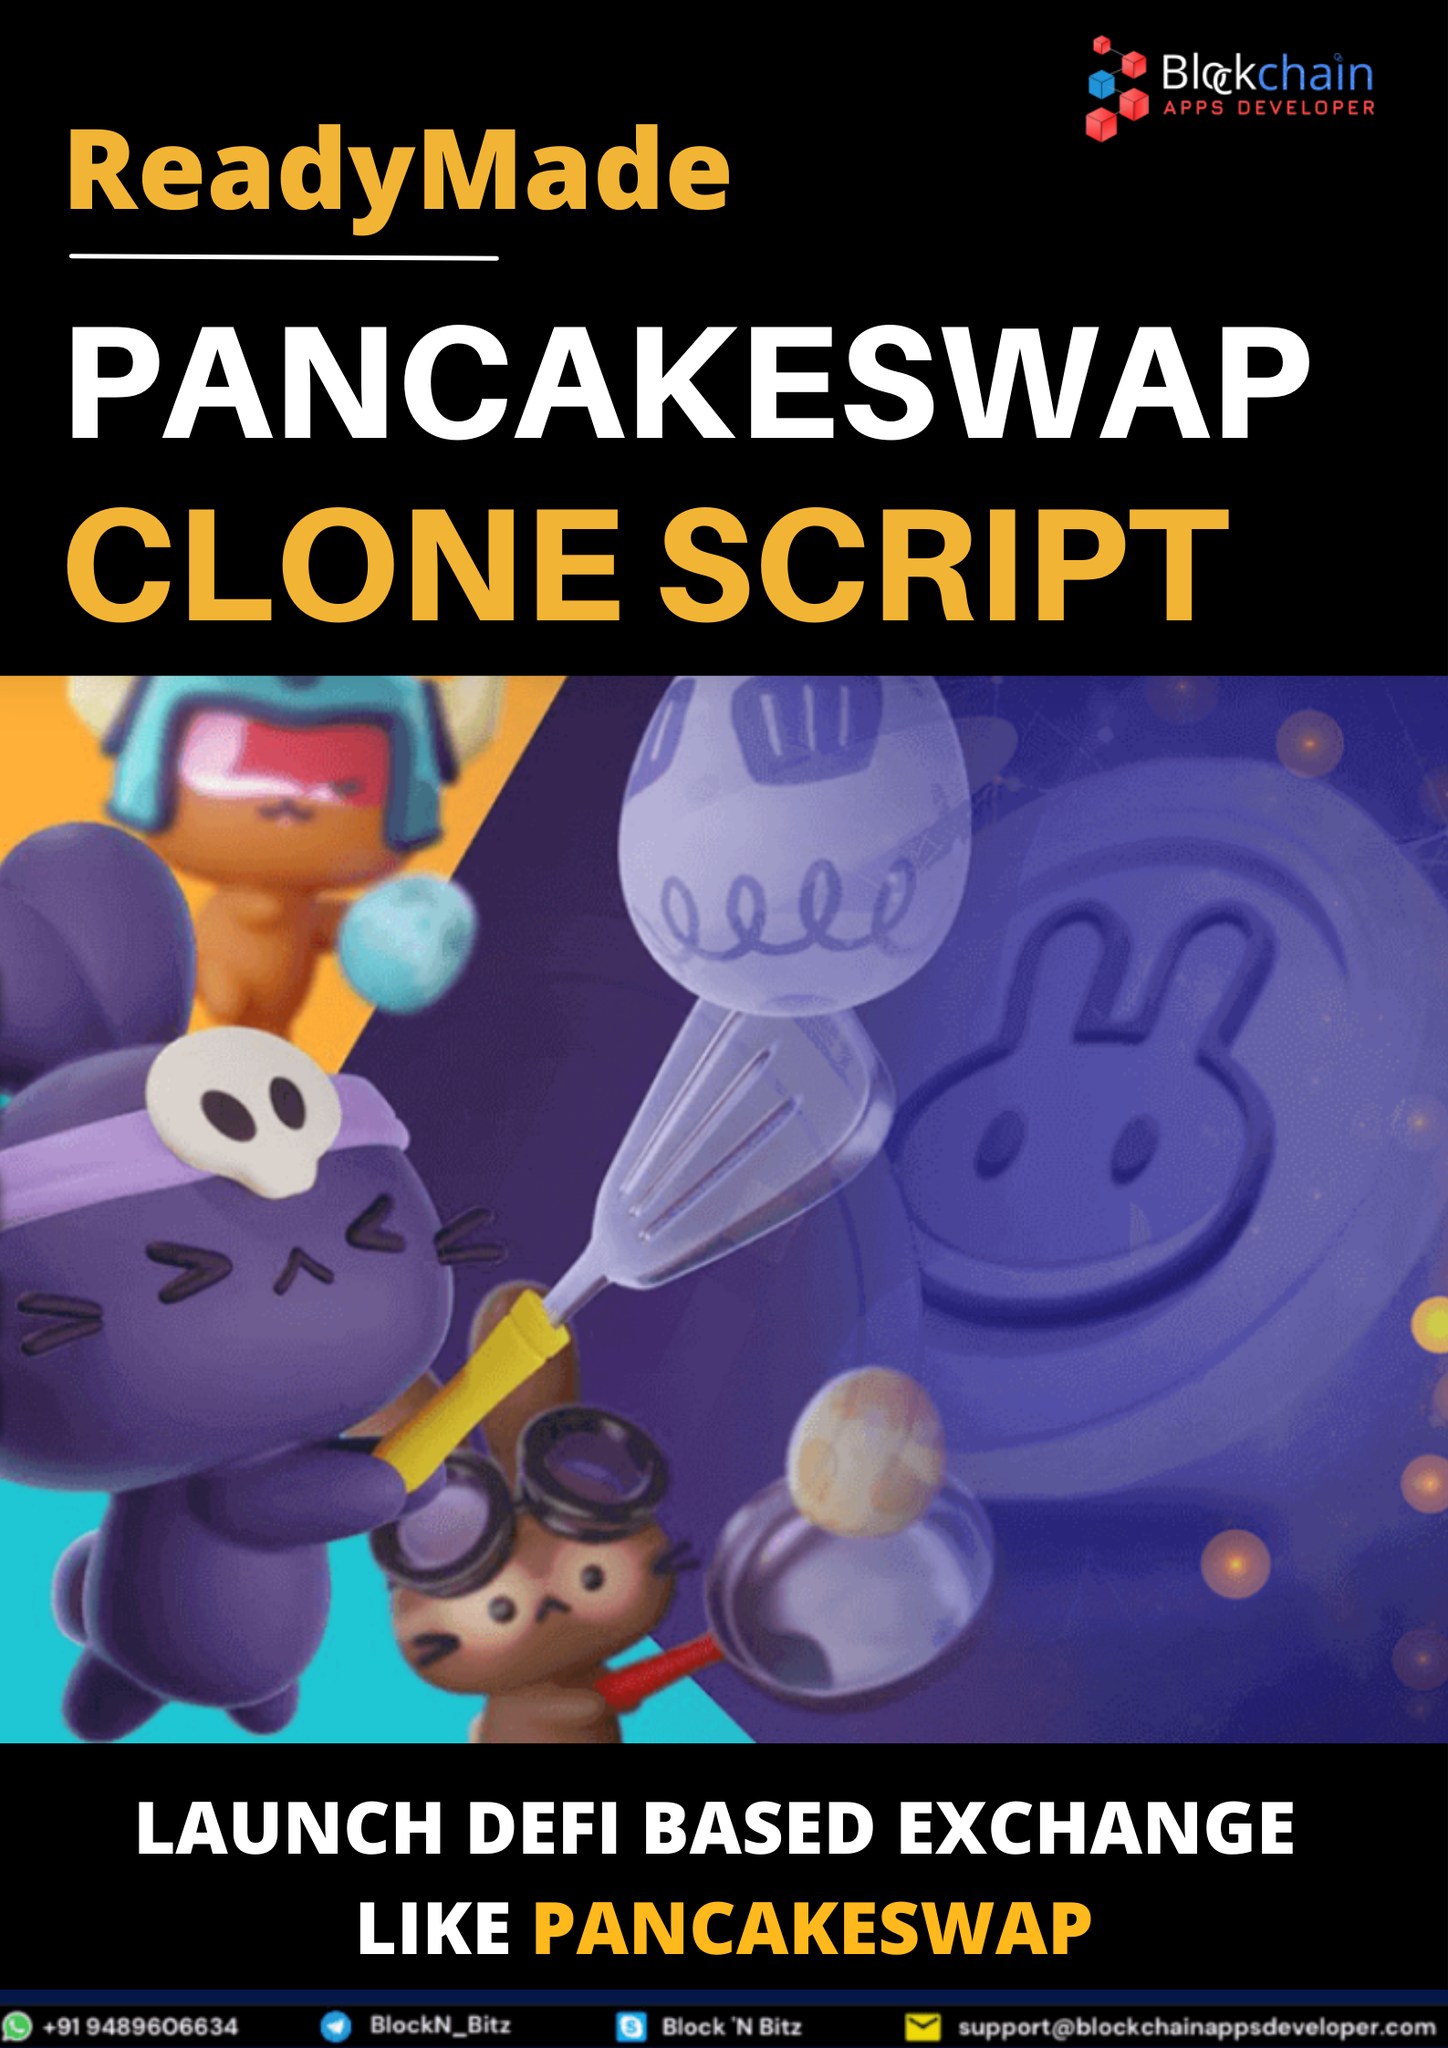 readymade-pancakeswap-clone-script-d0c85376